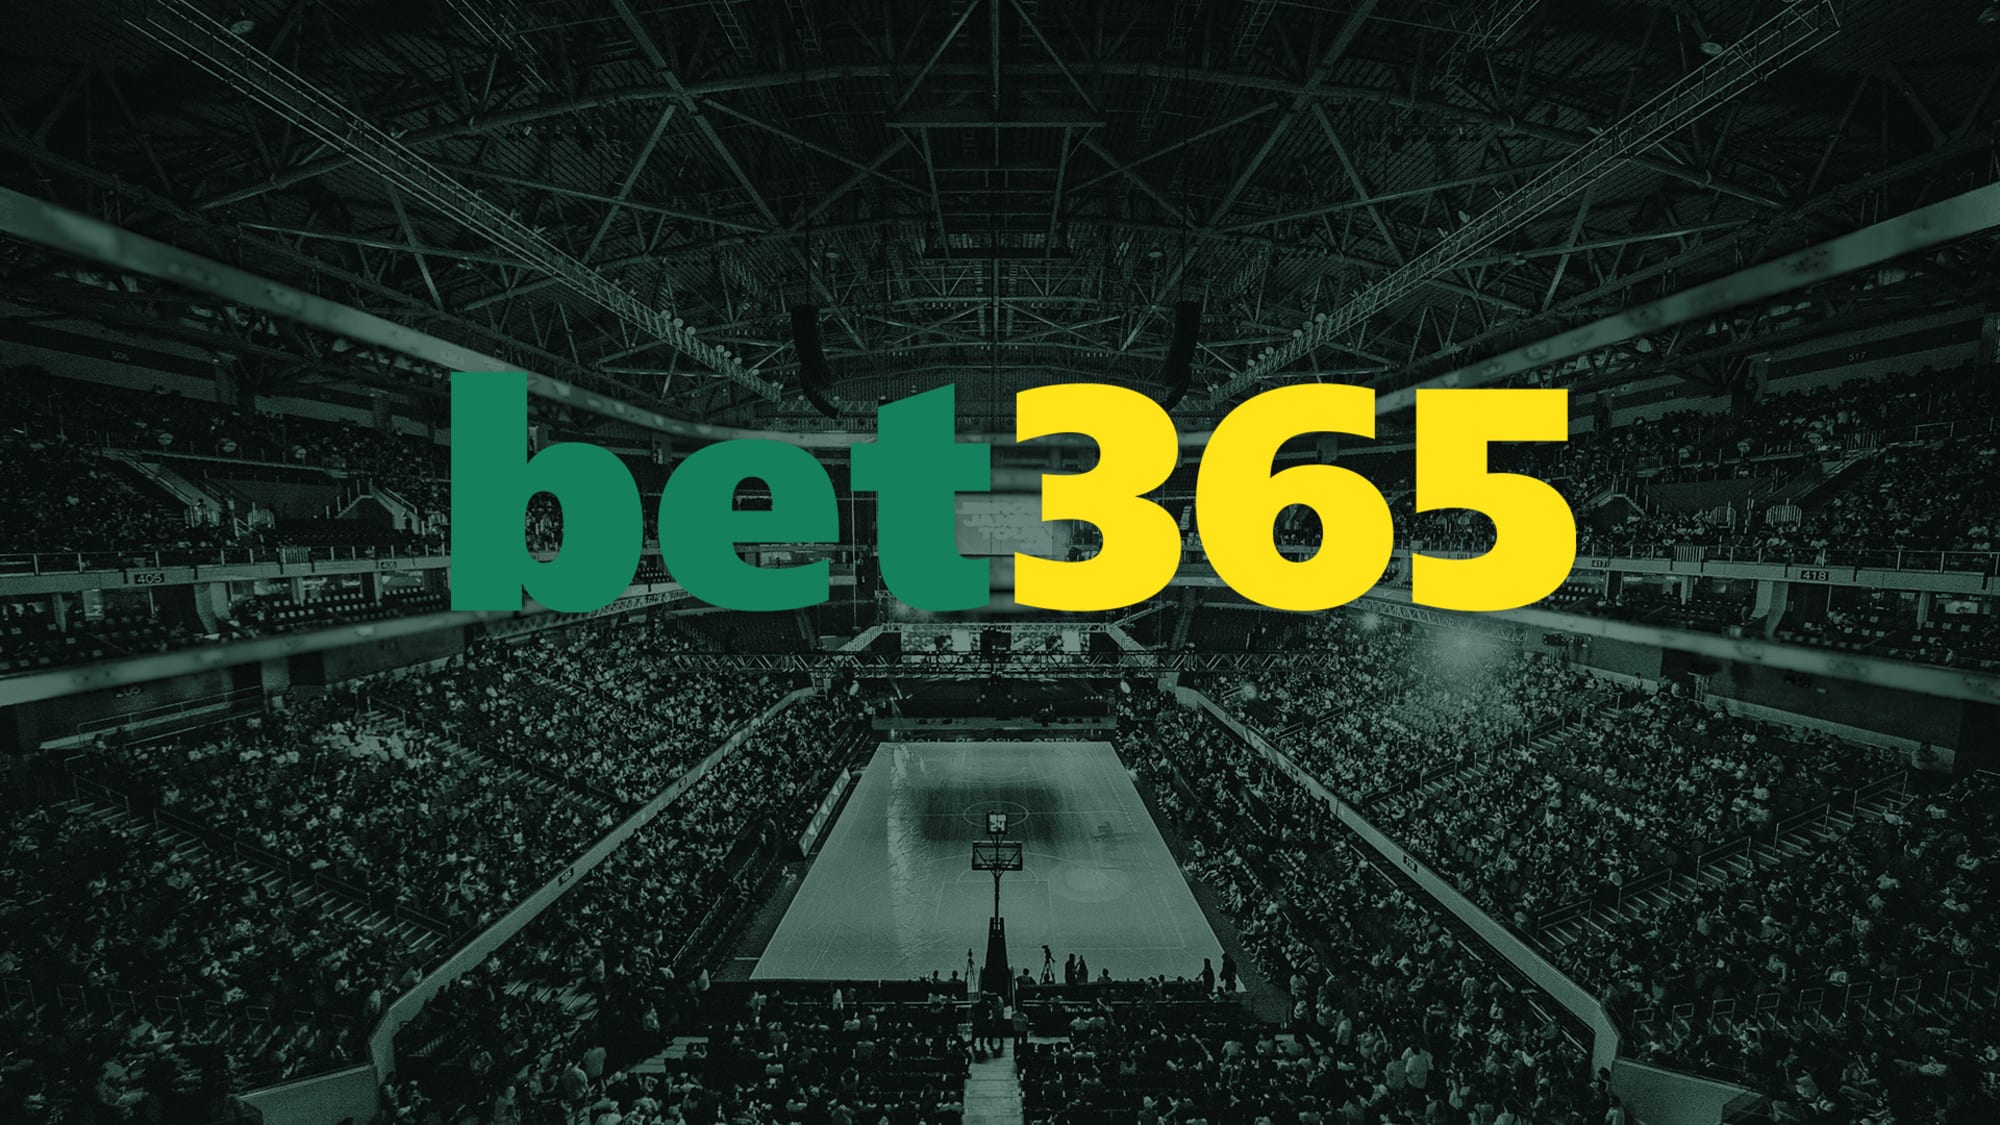 banco de dados futebol virtual bet365